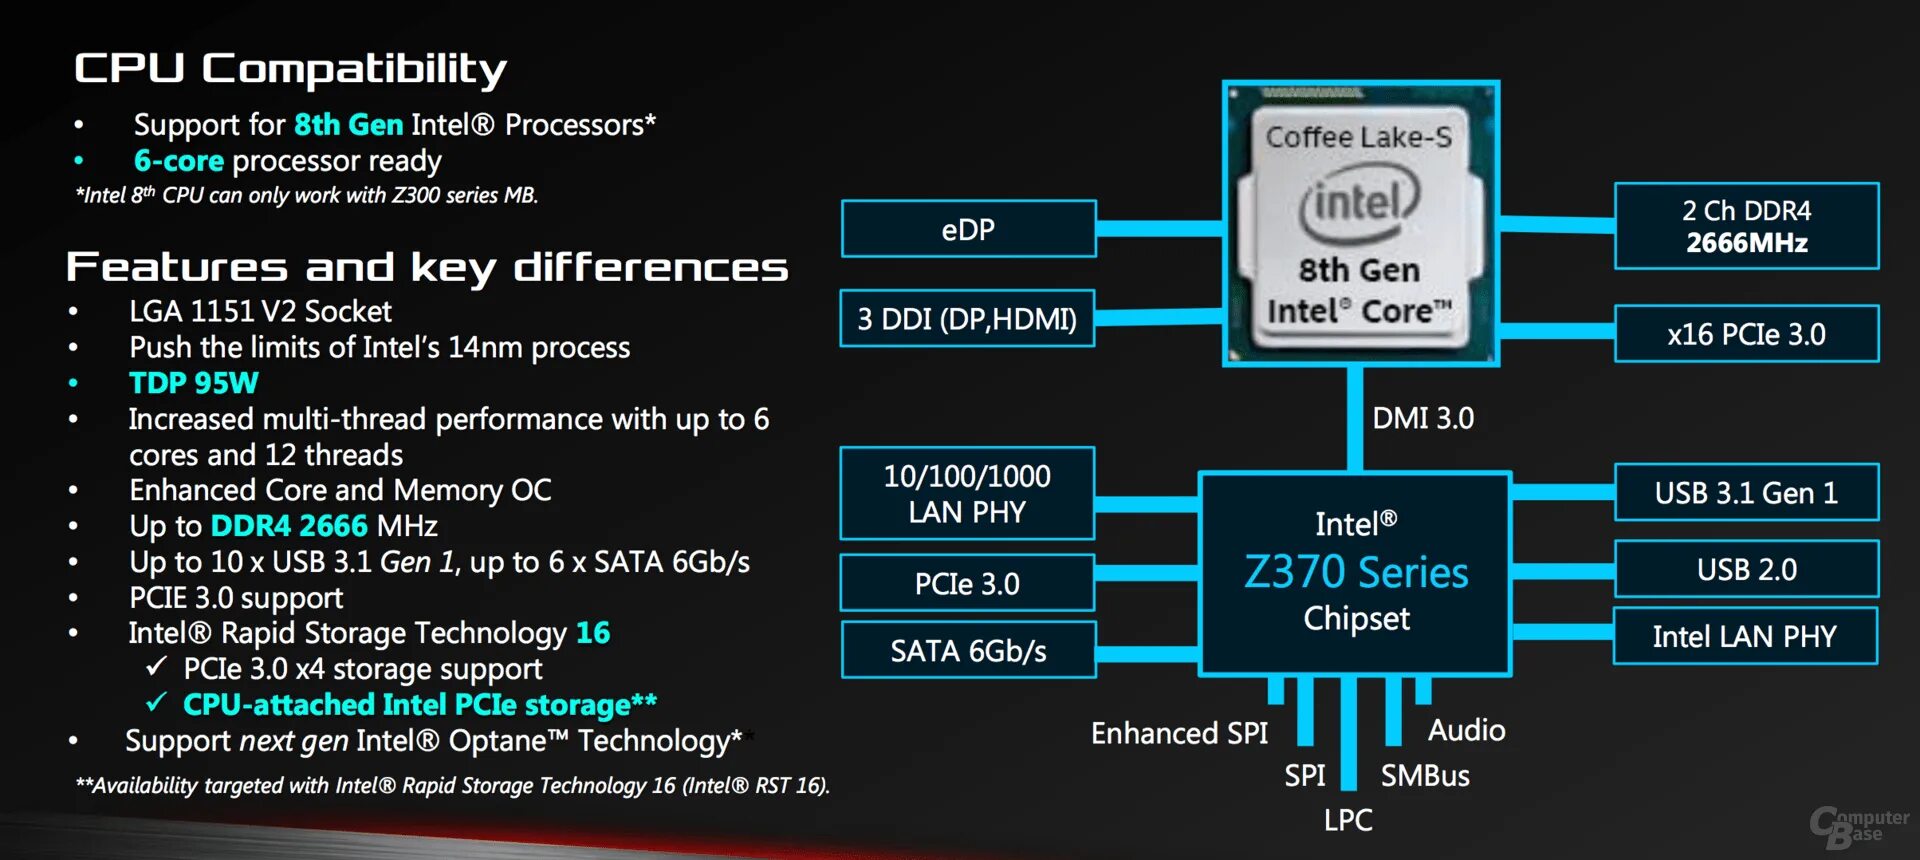 Intel Coffee Lake-s IMC. Архитектура Intel i7 8700. Intel DMI 4.0. Processor 8th Gen Intel. Intel r 4 series chipset